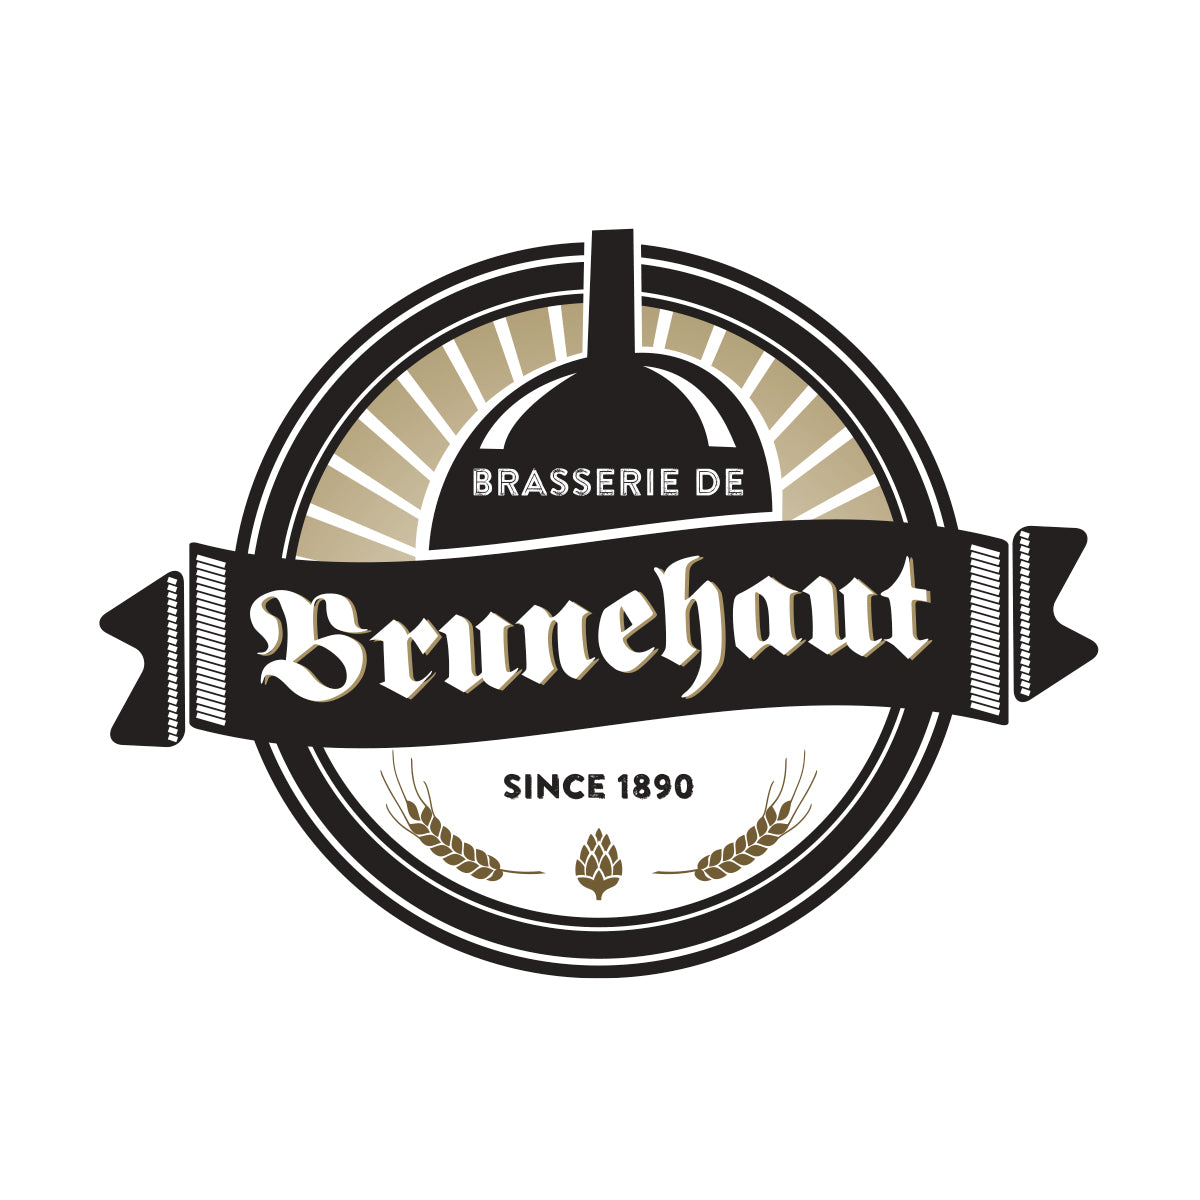 Brasserie Brunehaut